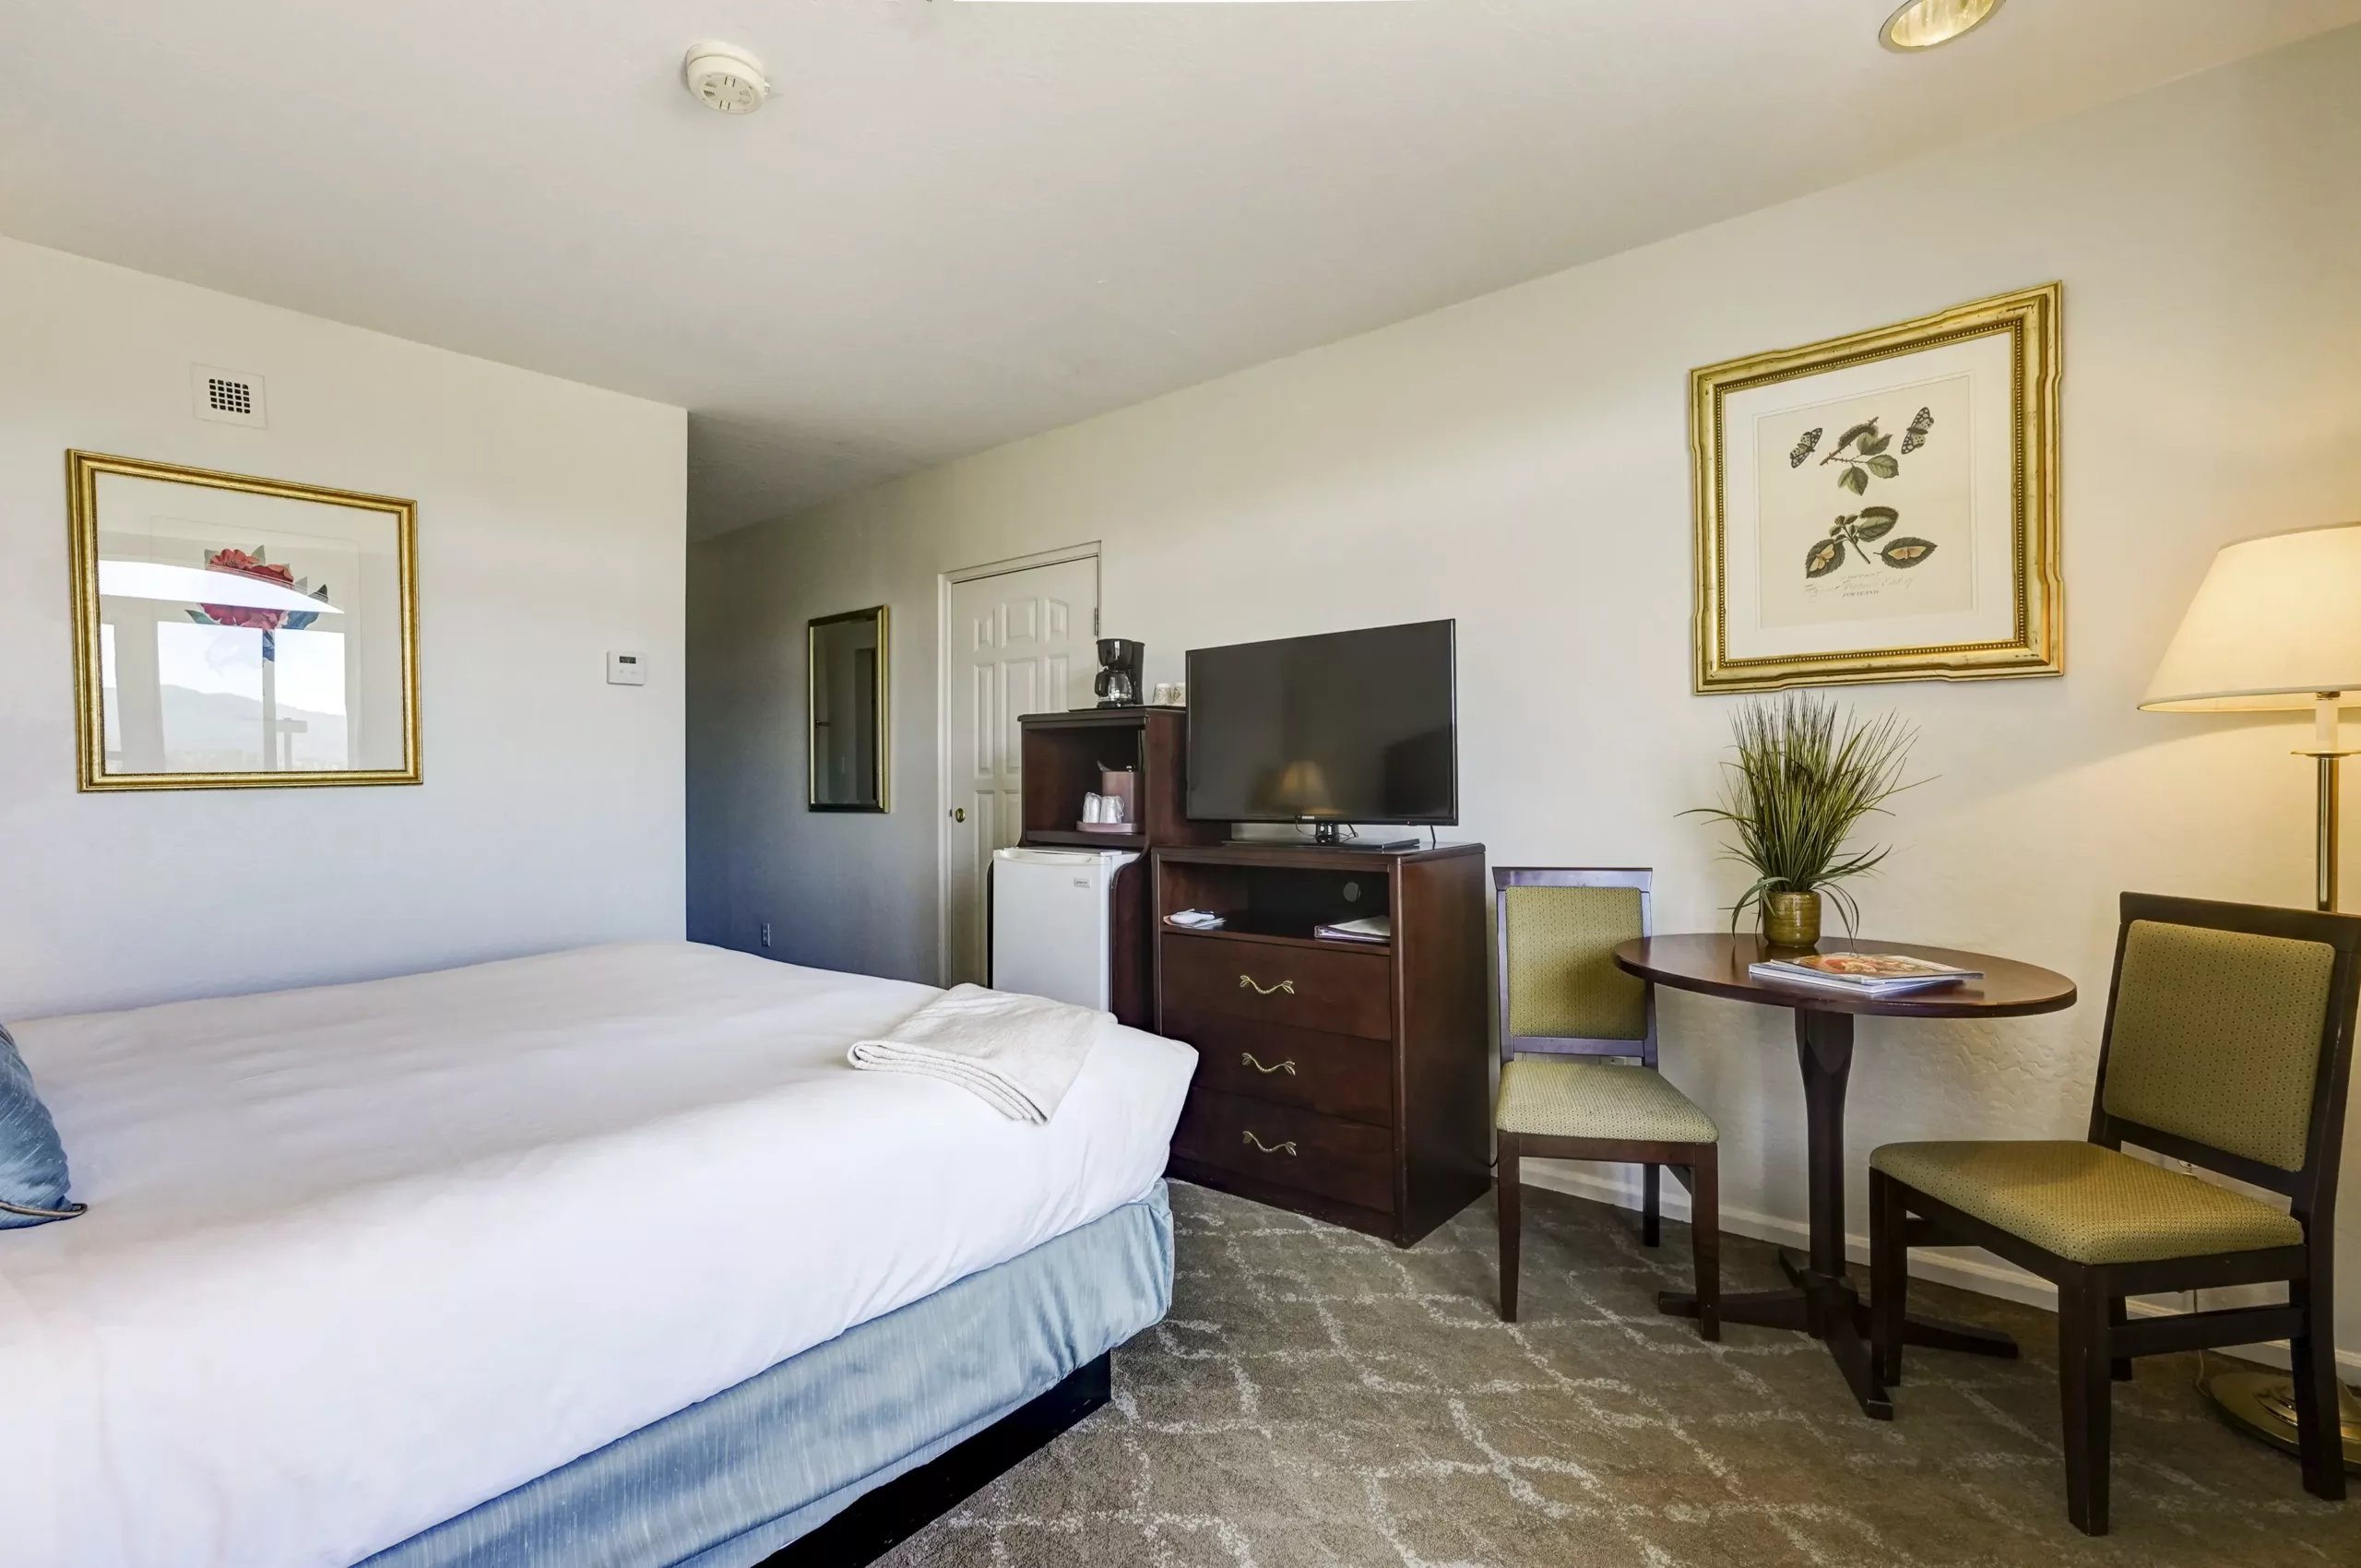 Beautiful Standard Room at Forest Villas Hotel in Prescott AZ